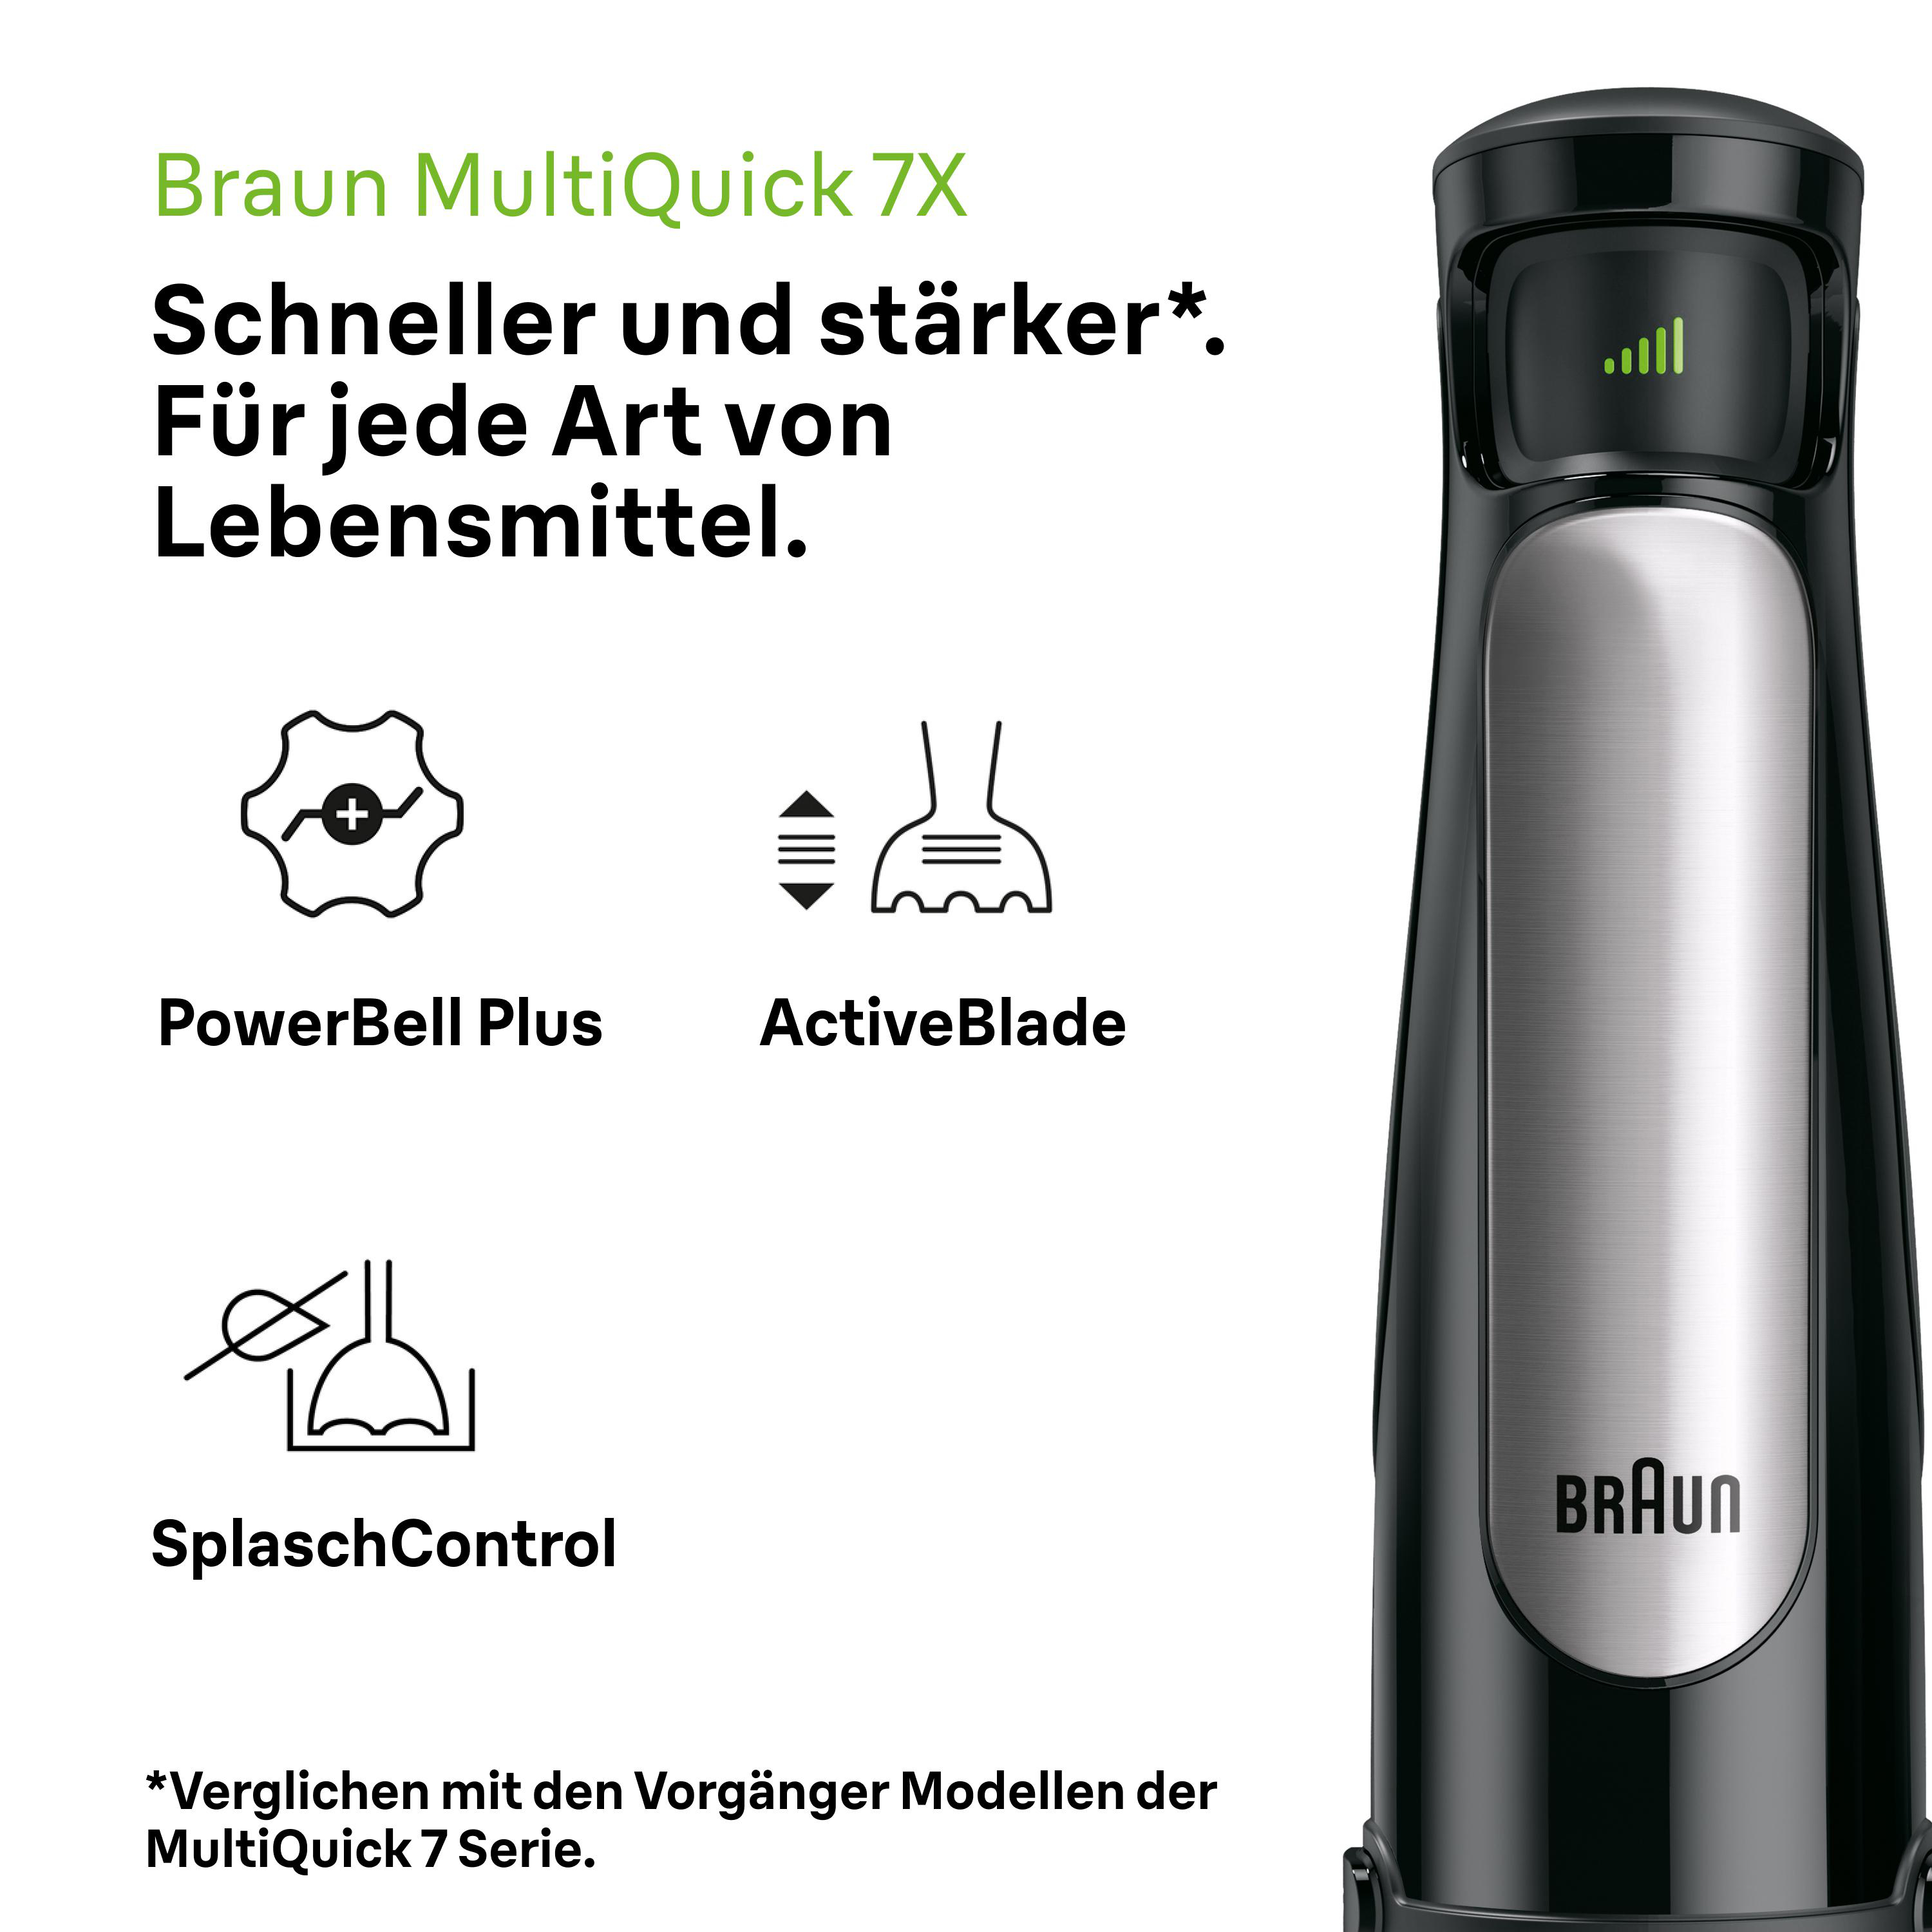 Stabmixer (Messbecher)) 0.6 MQ Premium BRAUN Liter 7000X Watt, 7 Schwarz/Edelstahl (1000 MultiQuick